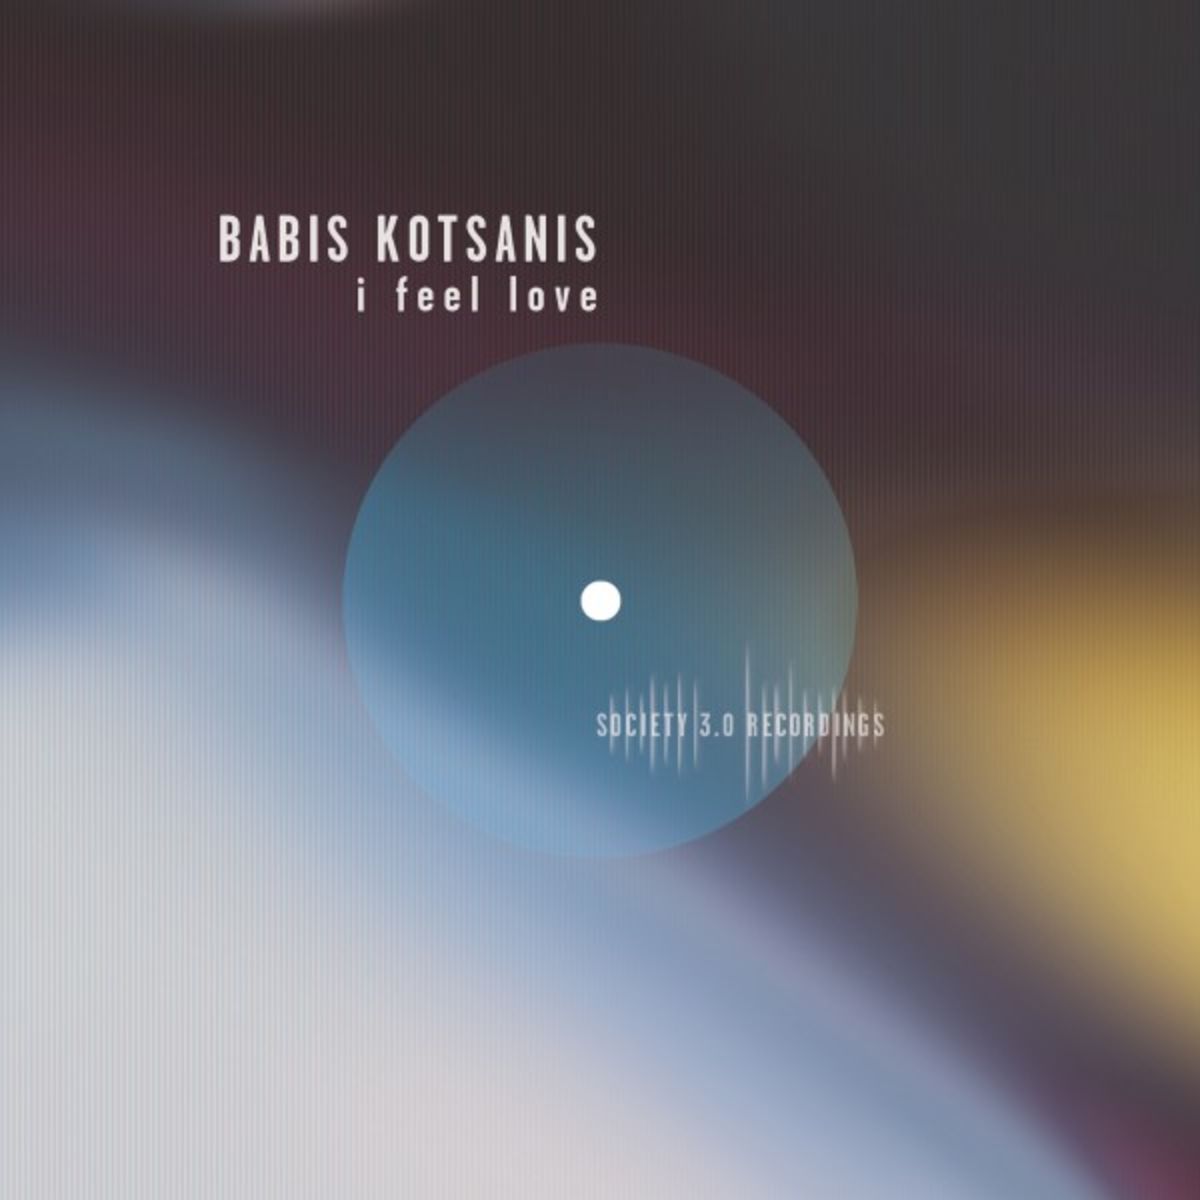 Babis Kotsanis - I Feel Love / Society 3.0